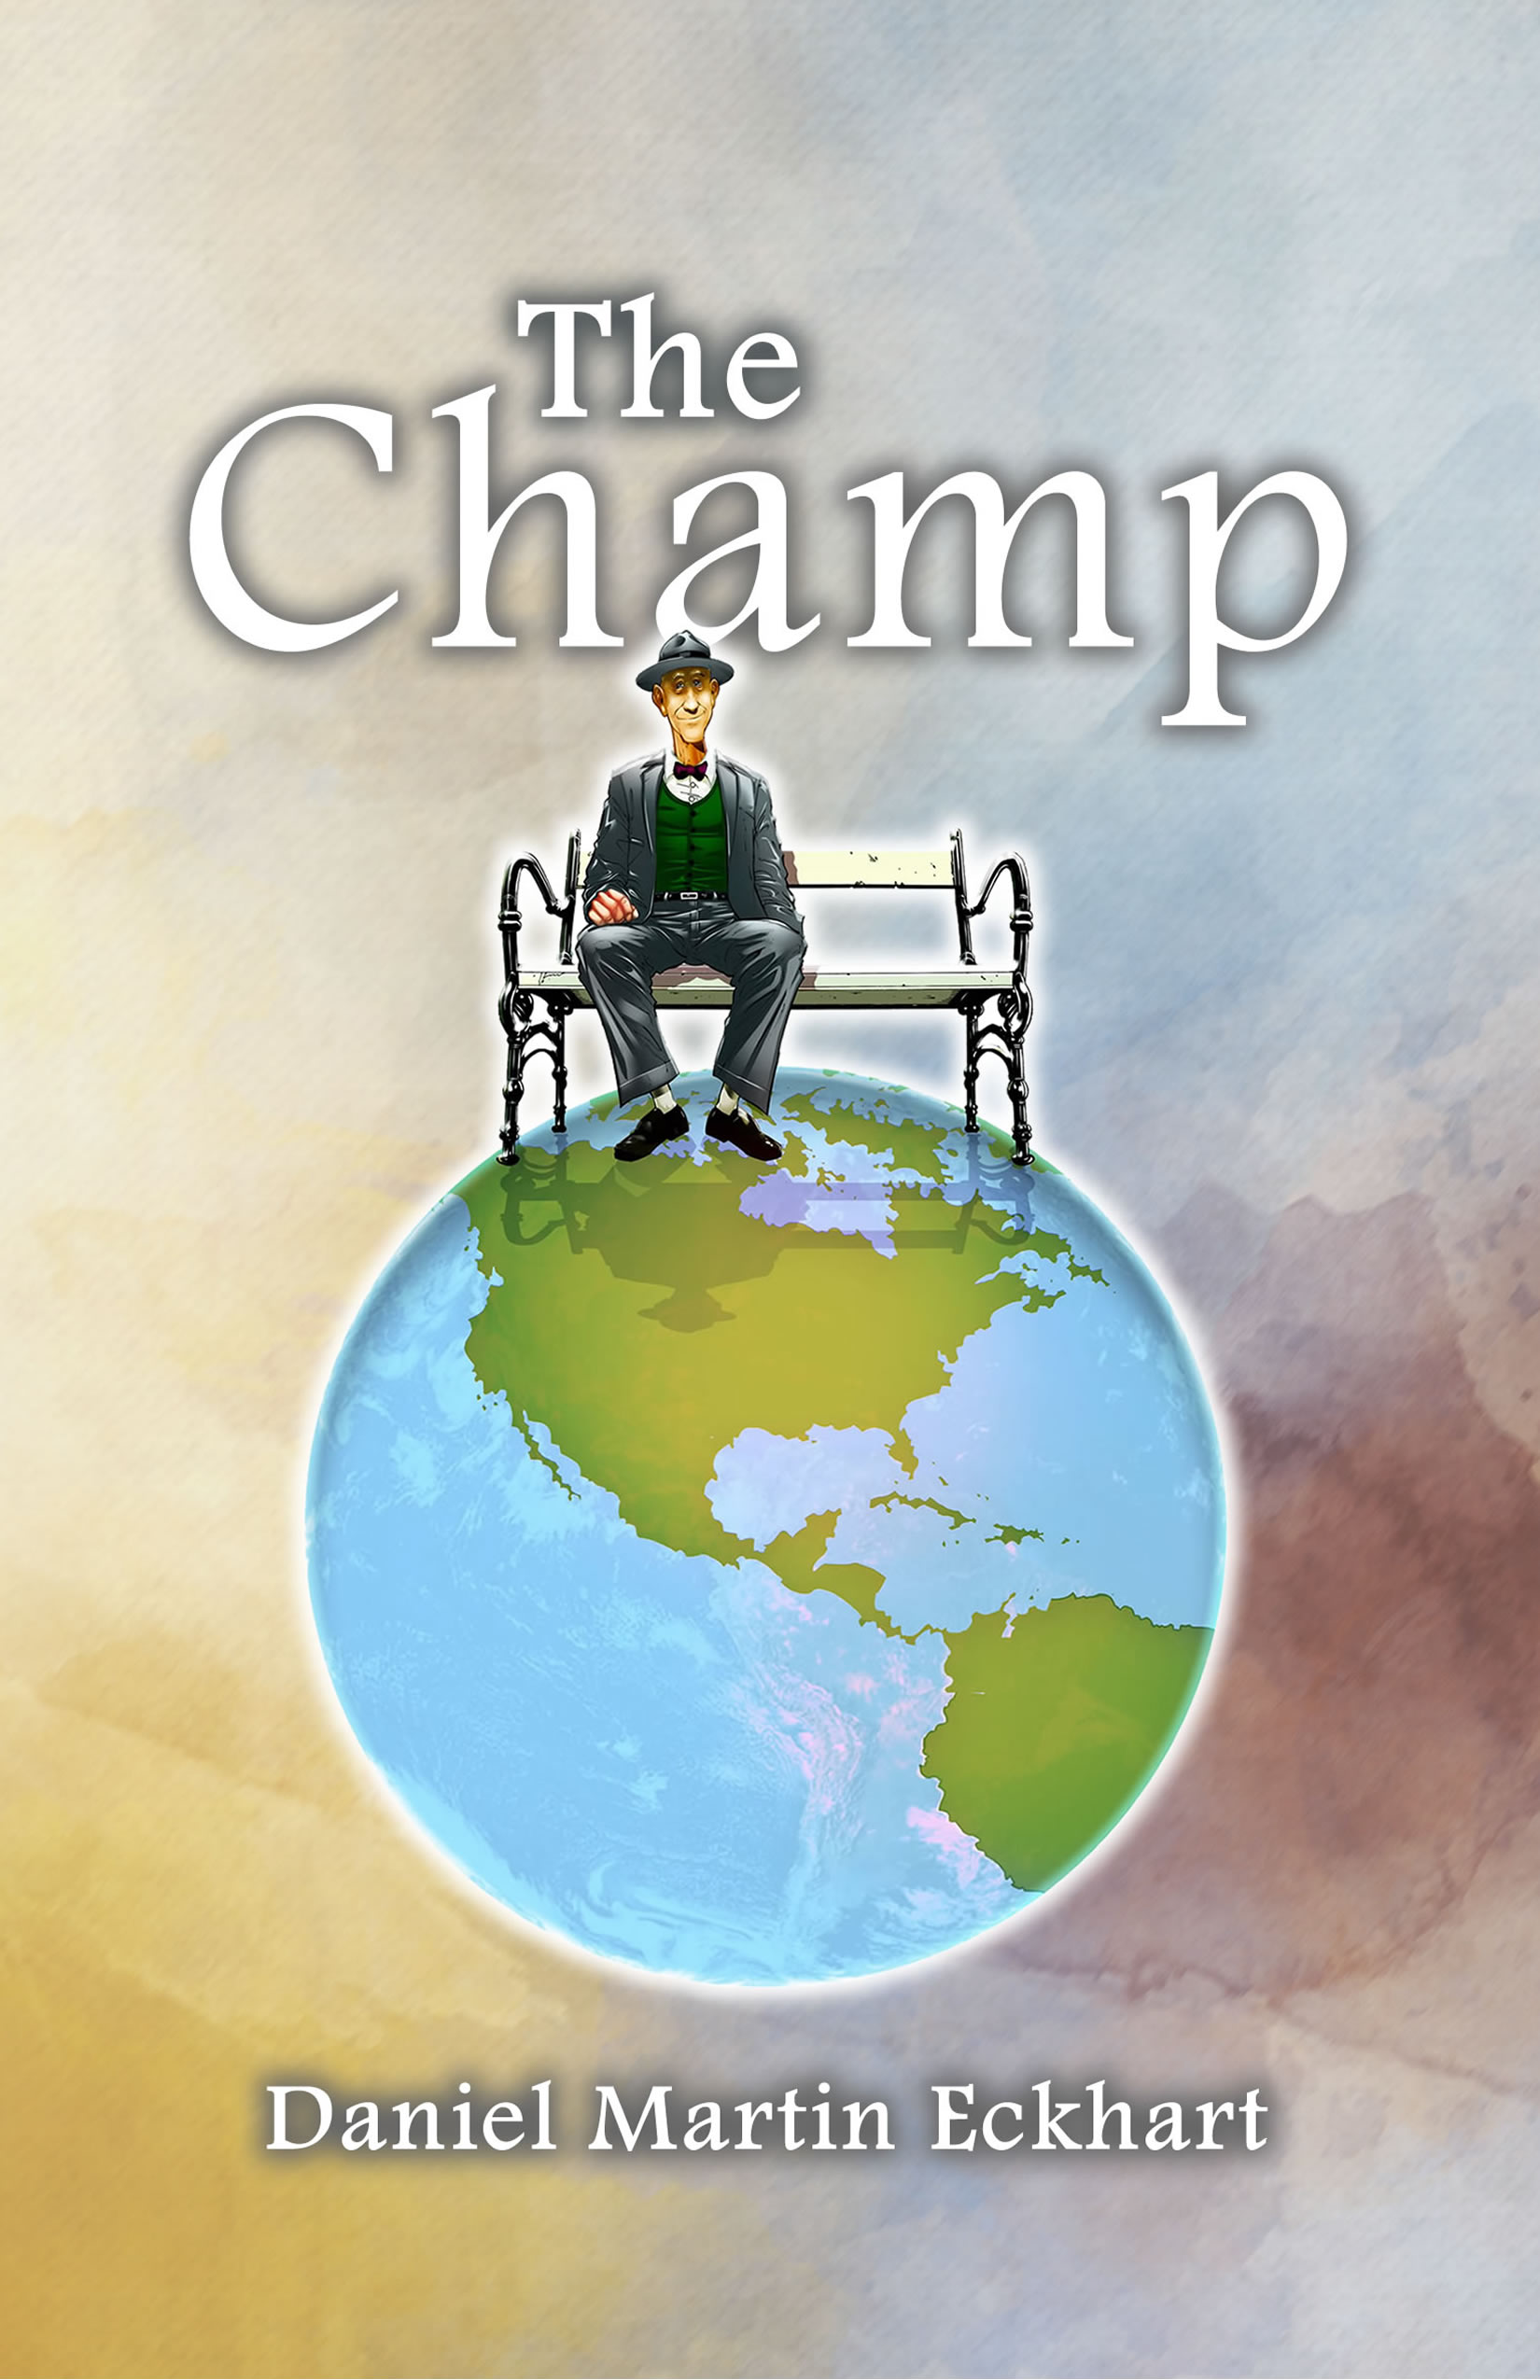 FREE: The Champ by Daniel Martin Eckhart